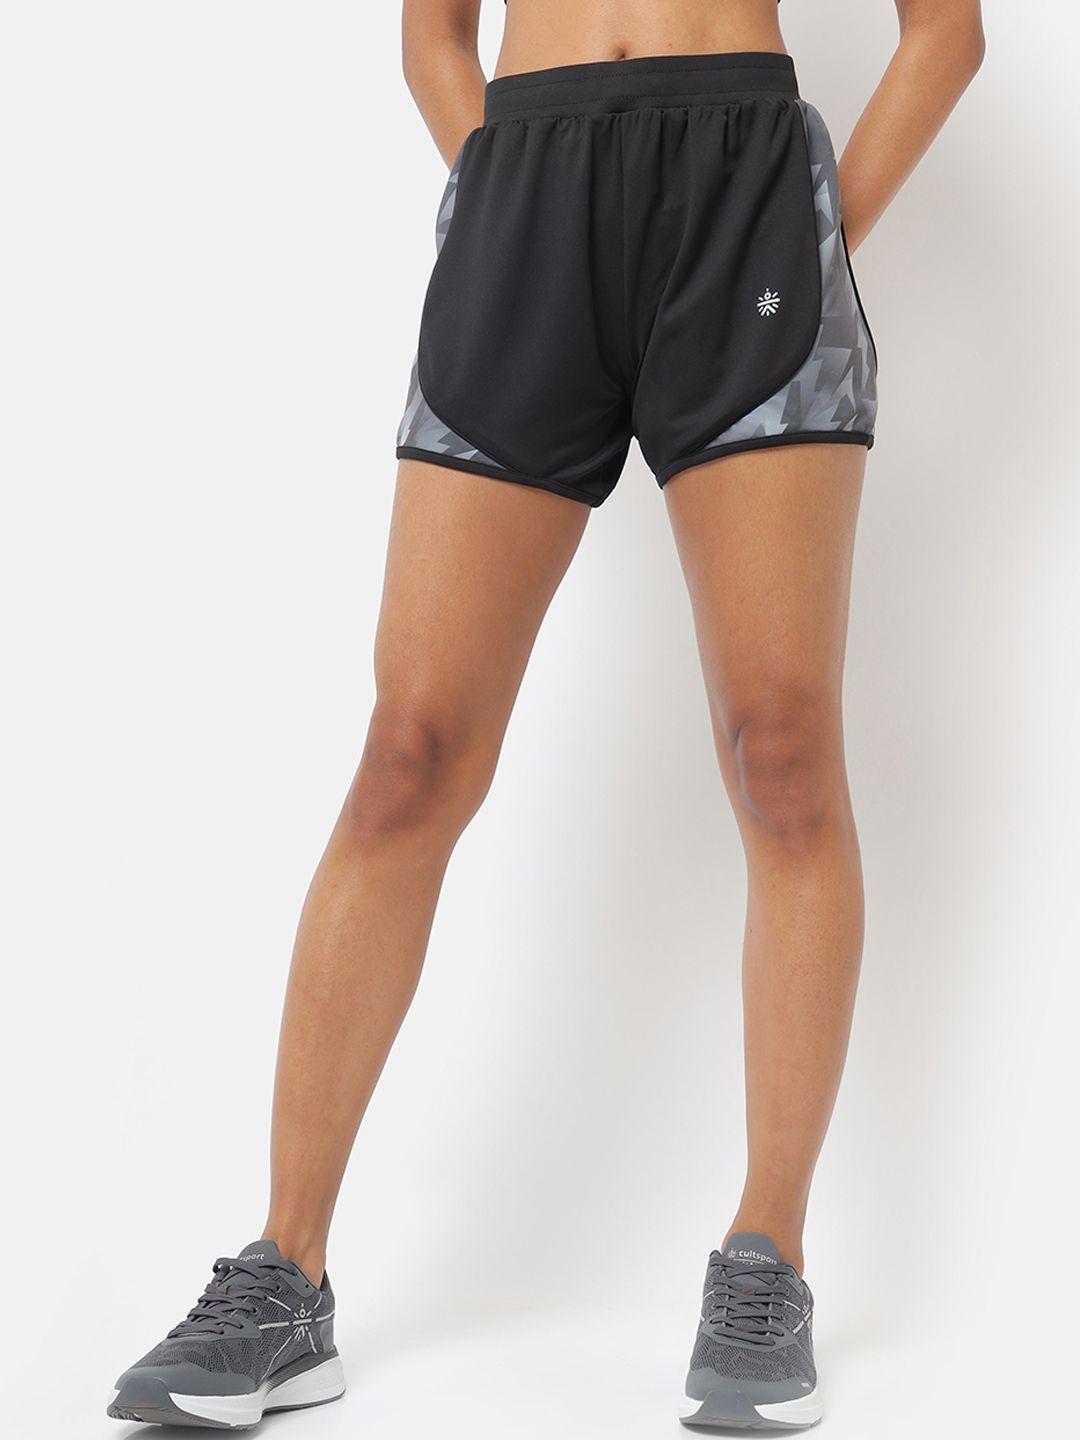 cultsport women charcoal grey training or gym sports shorts